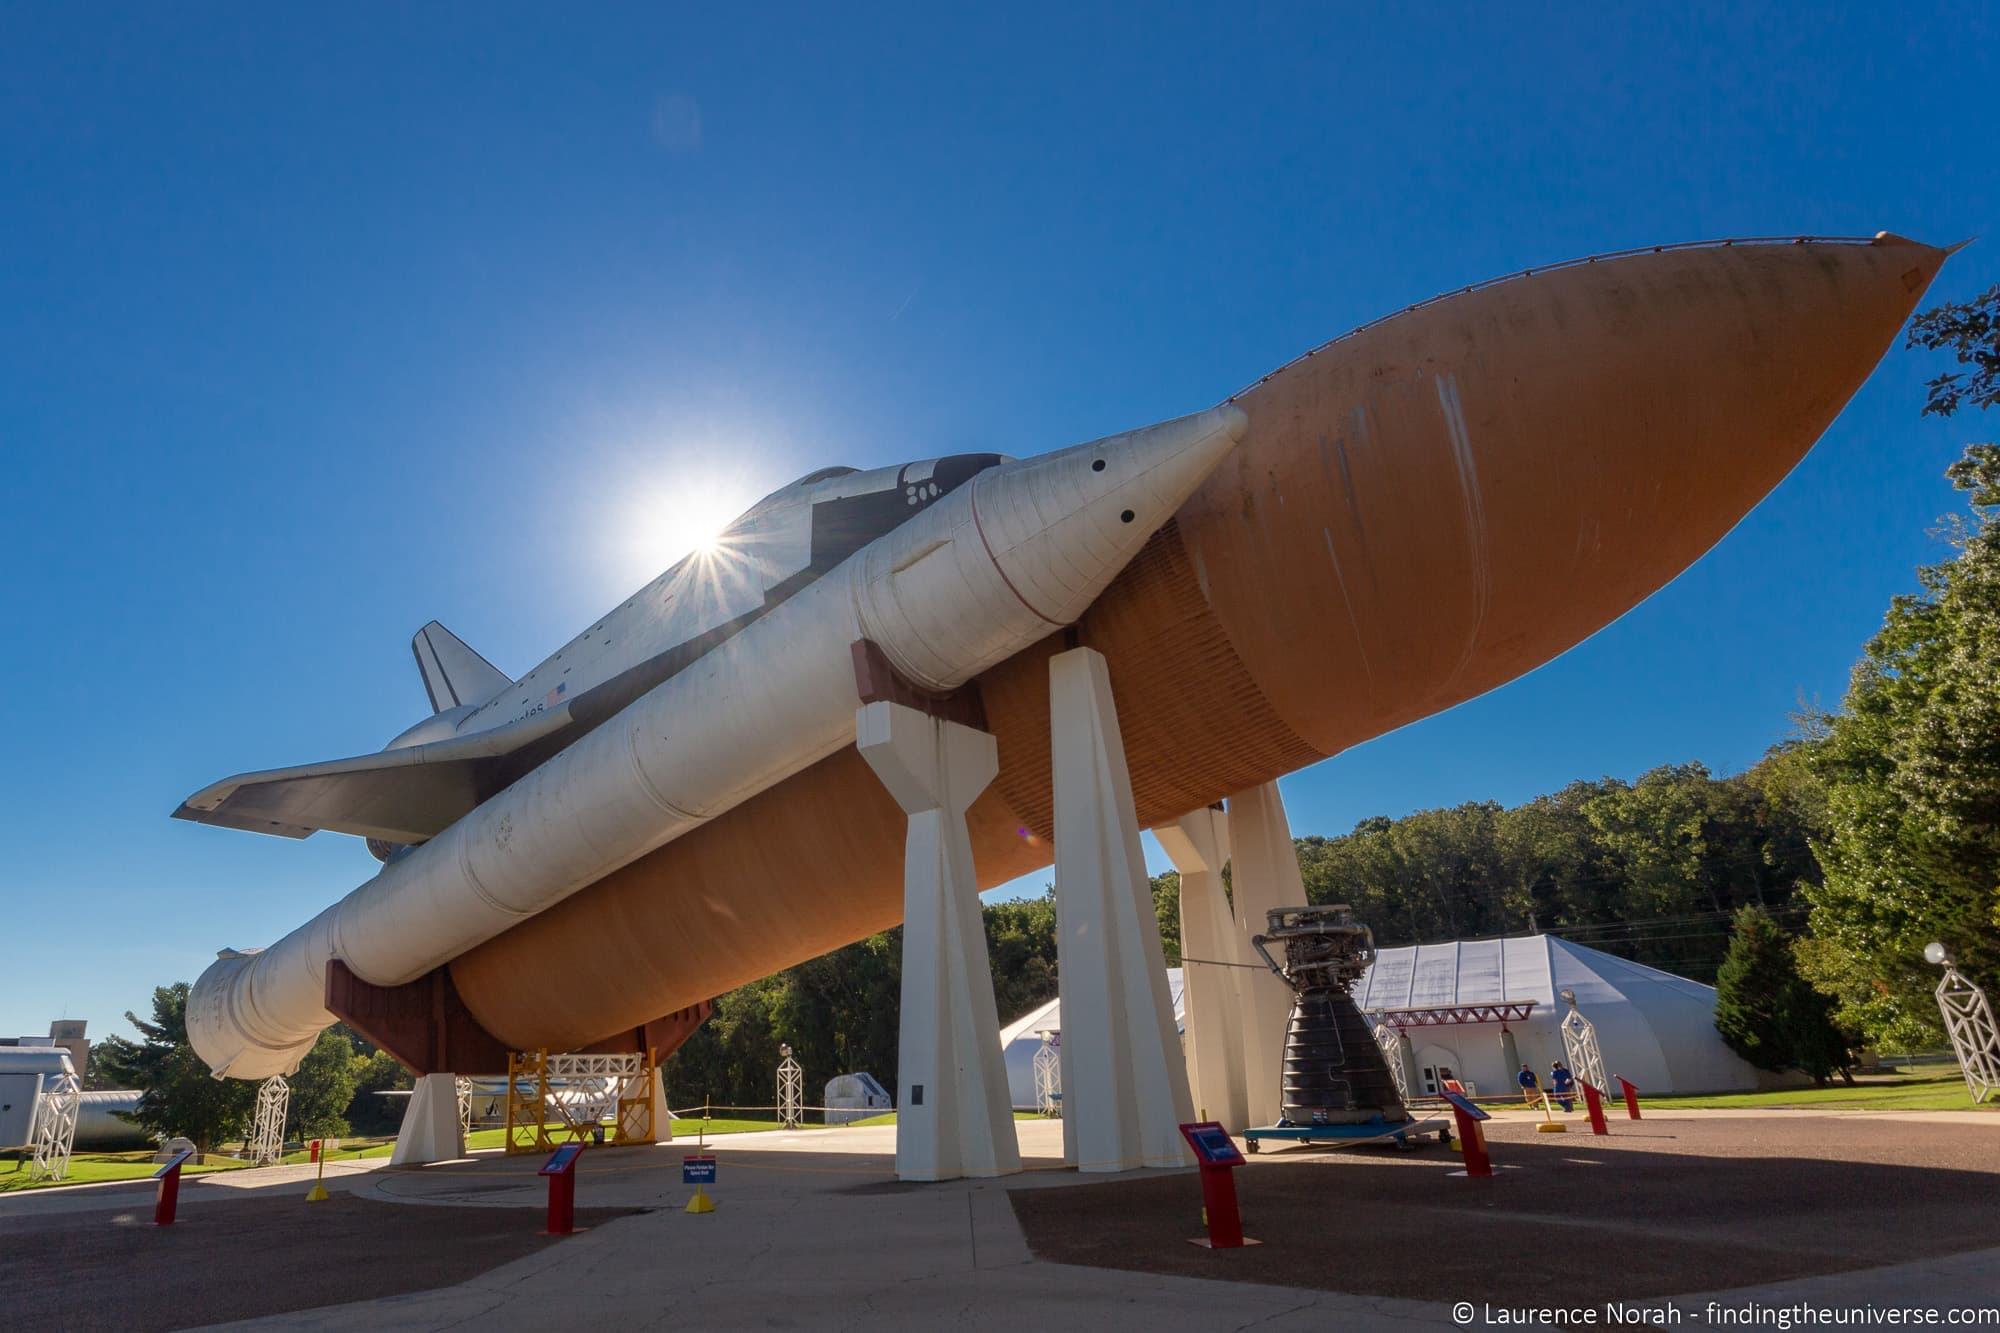 Space Shuttle at Space Camp Huntsville Alabama